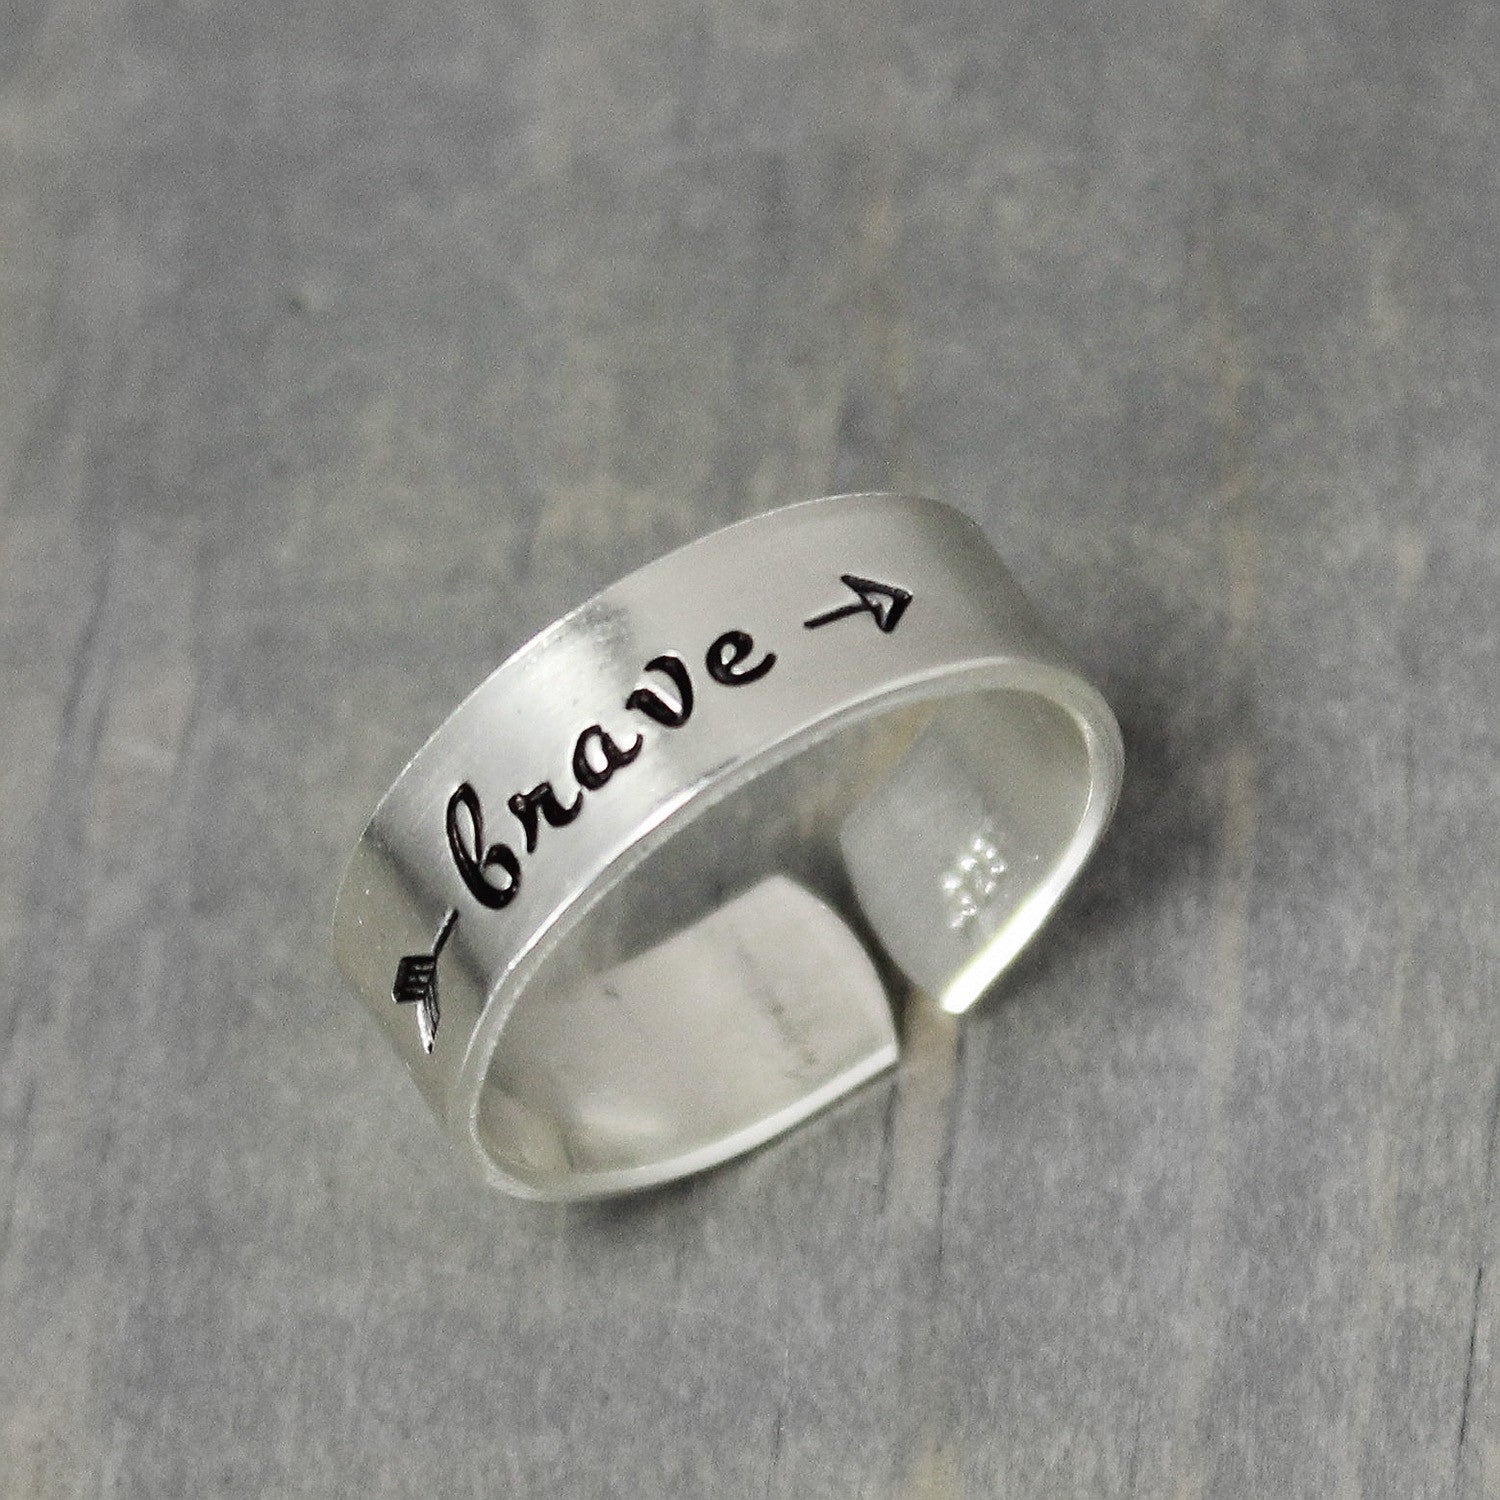 Silver Brave Ring 